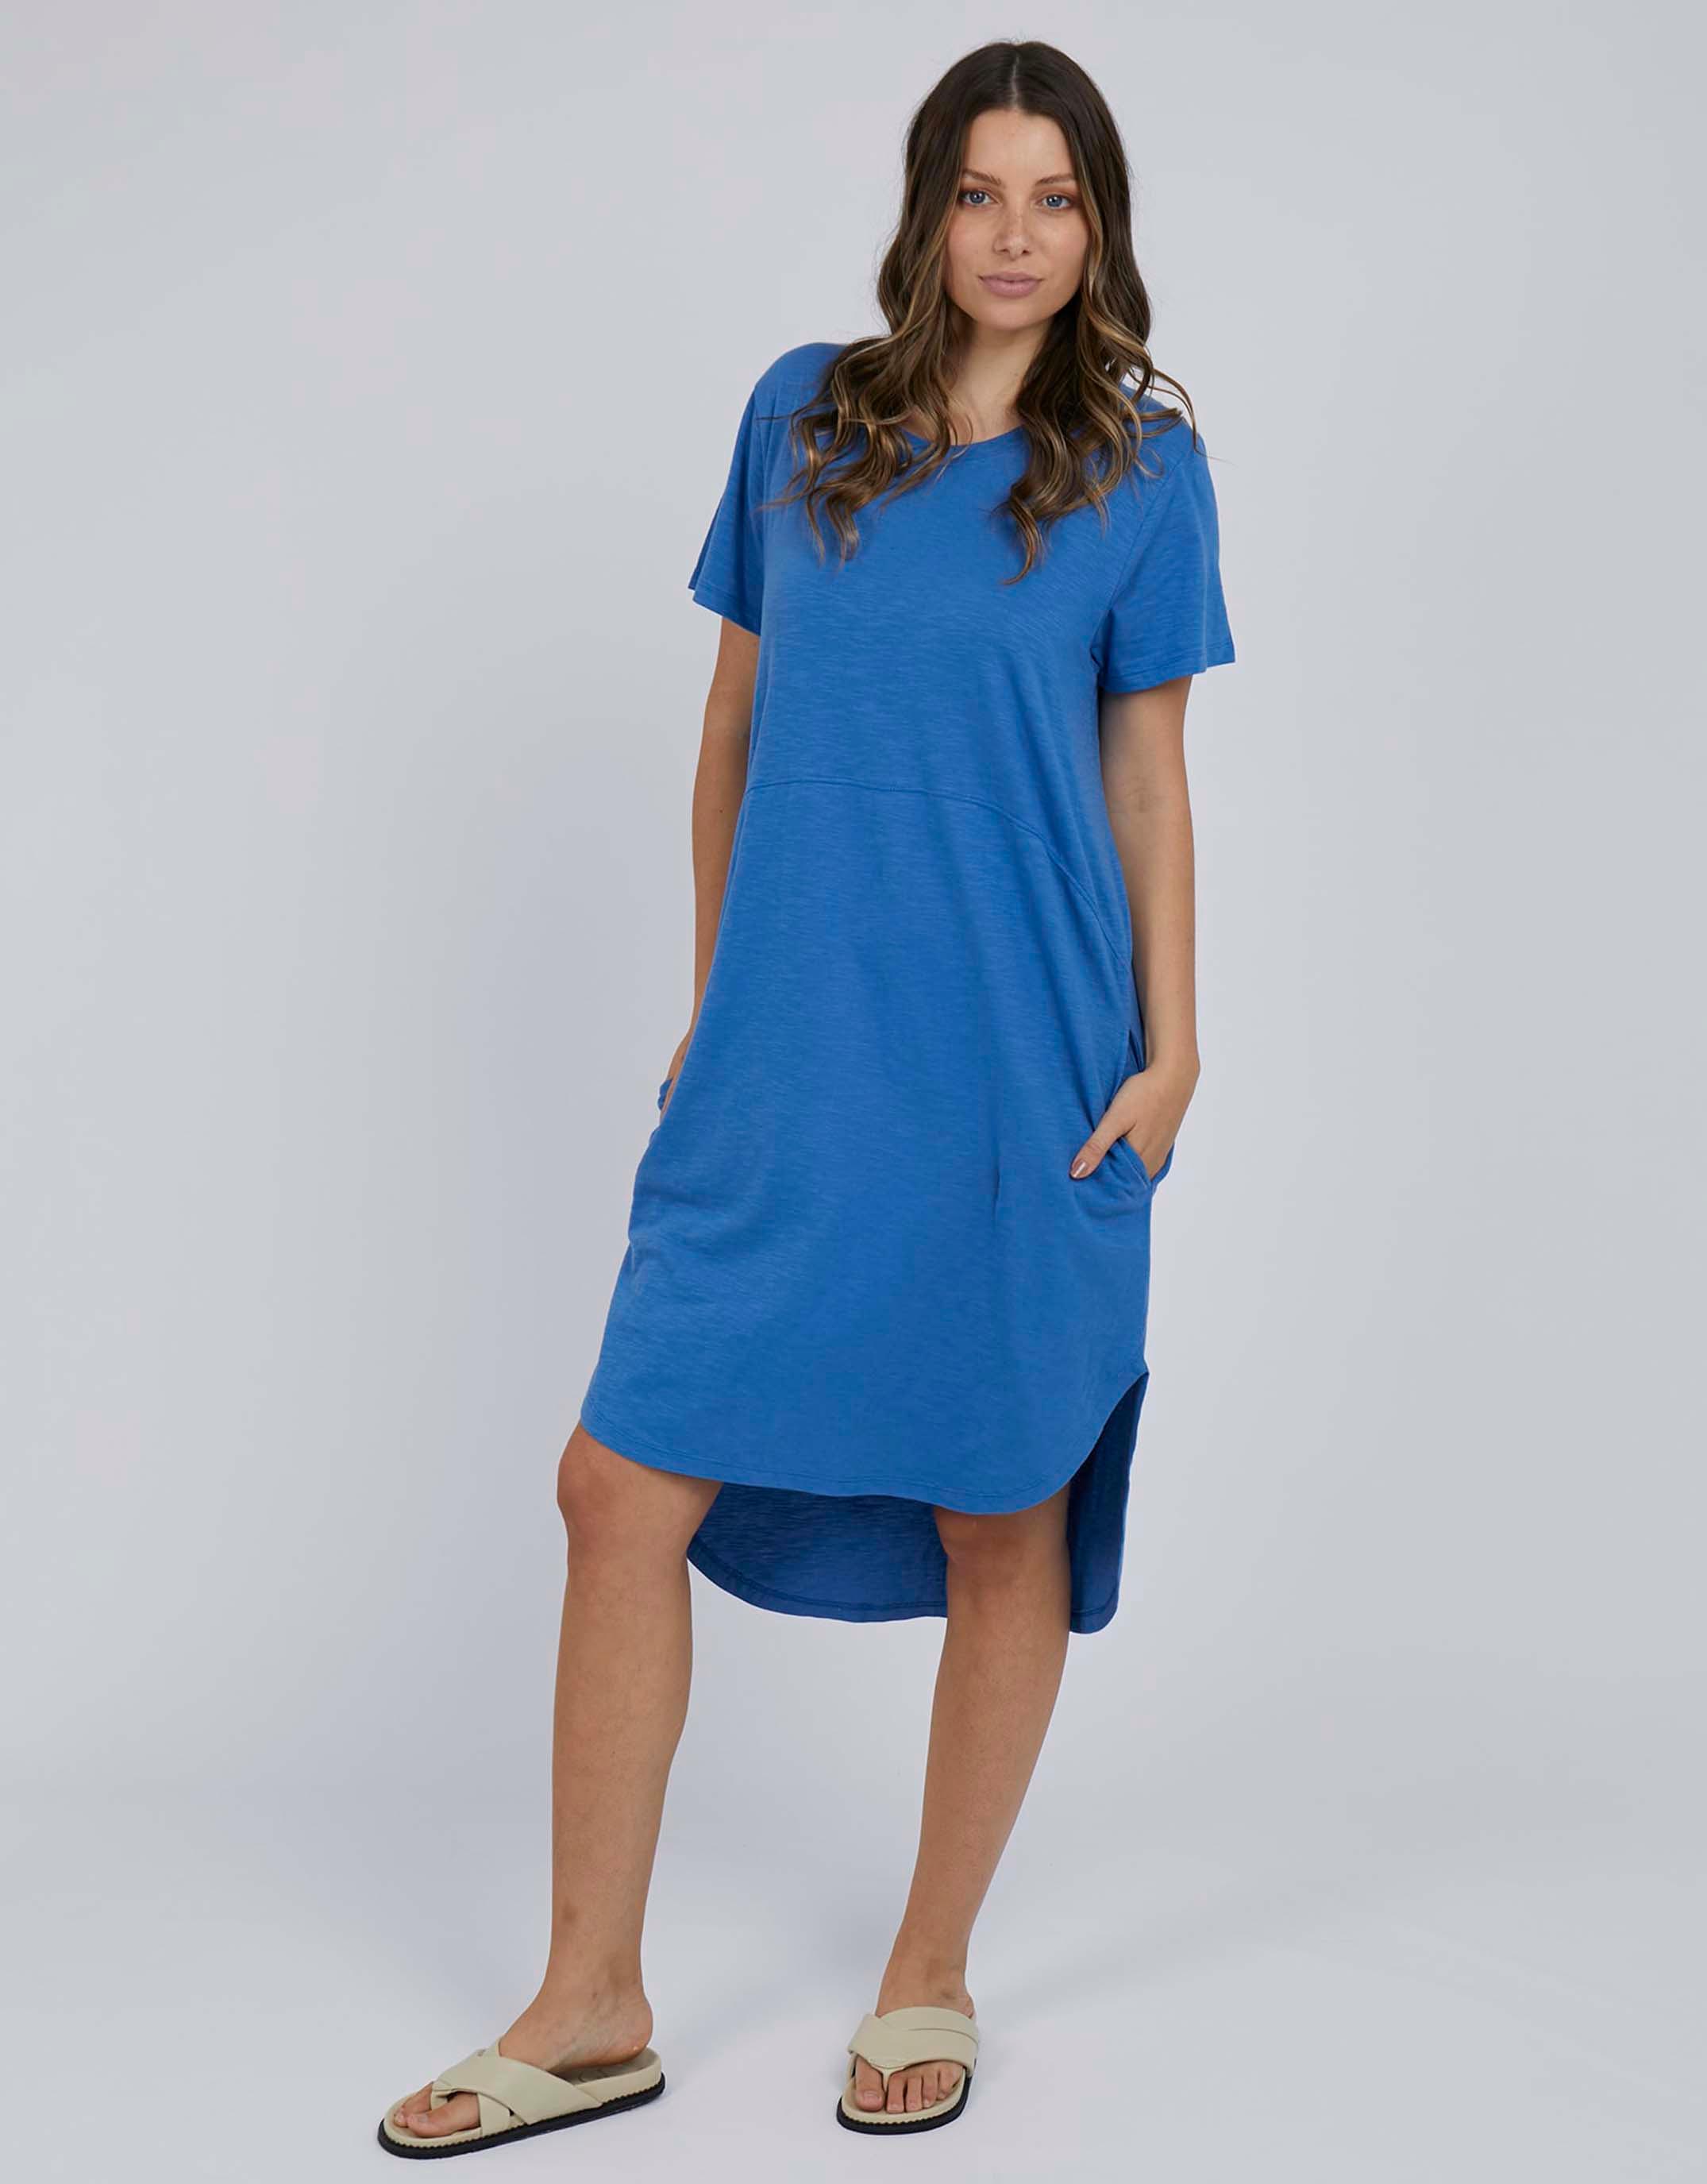 Bayley Dress - Blue - paulaglazebrook